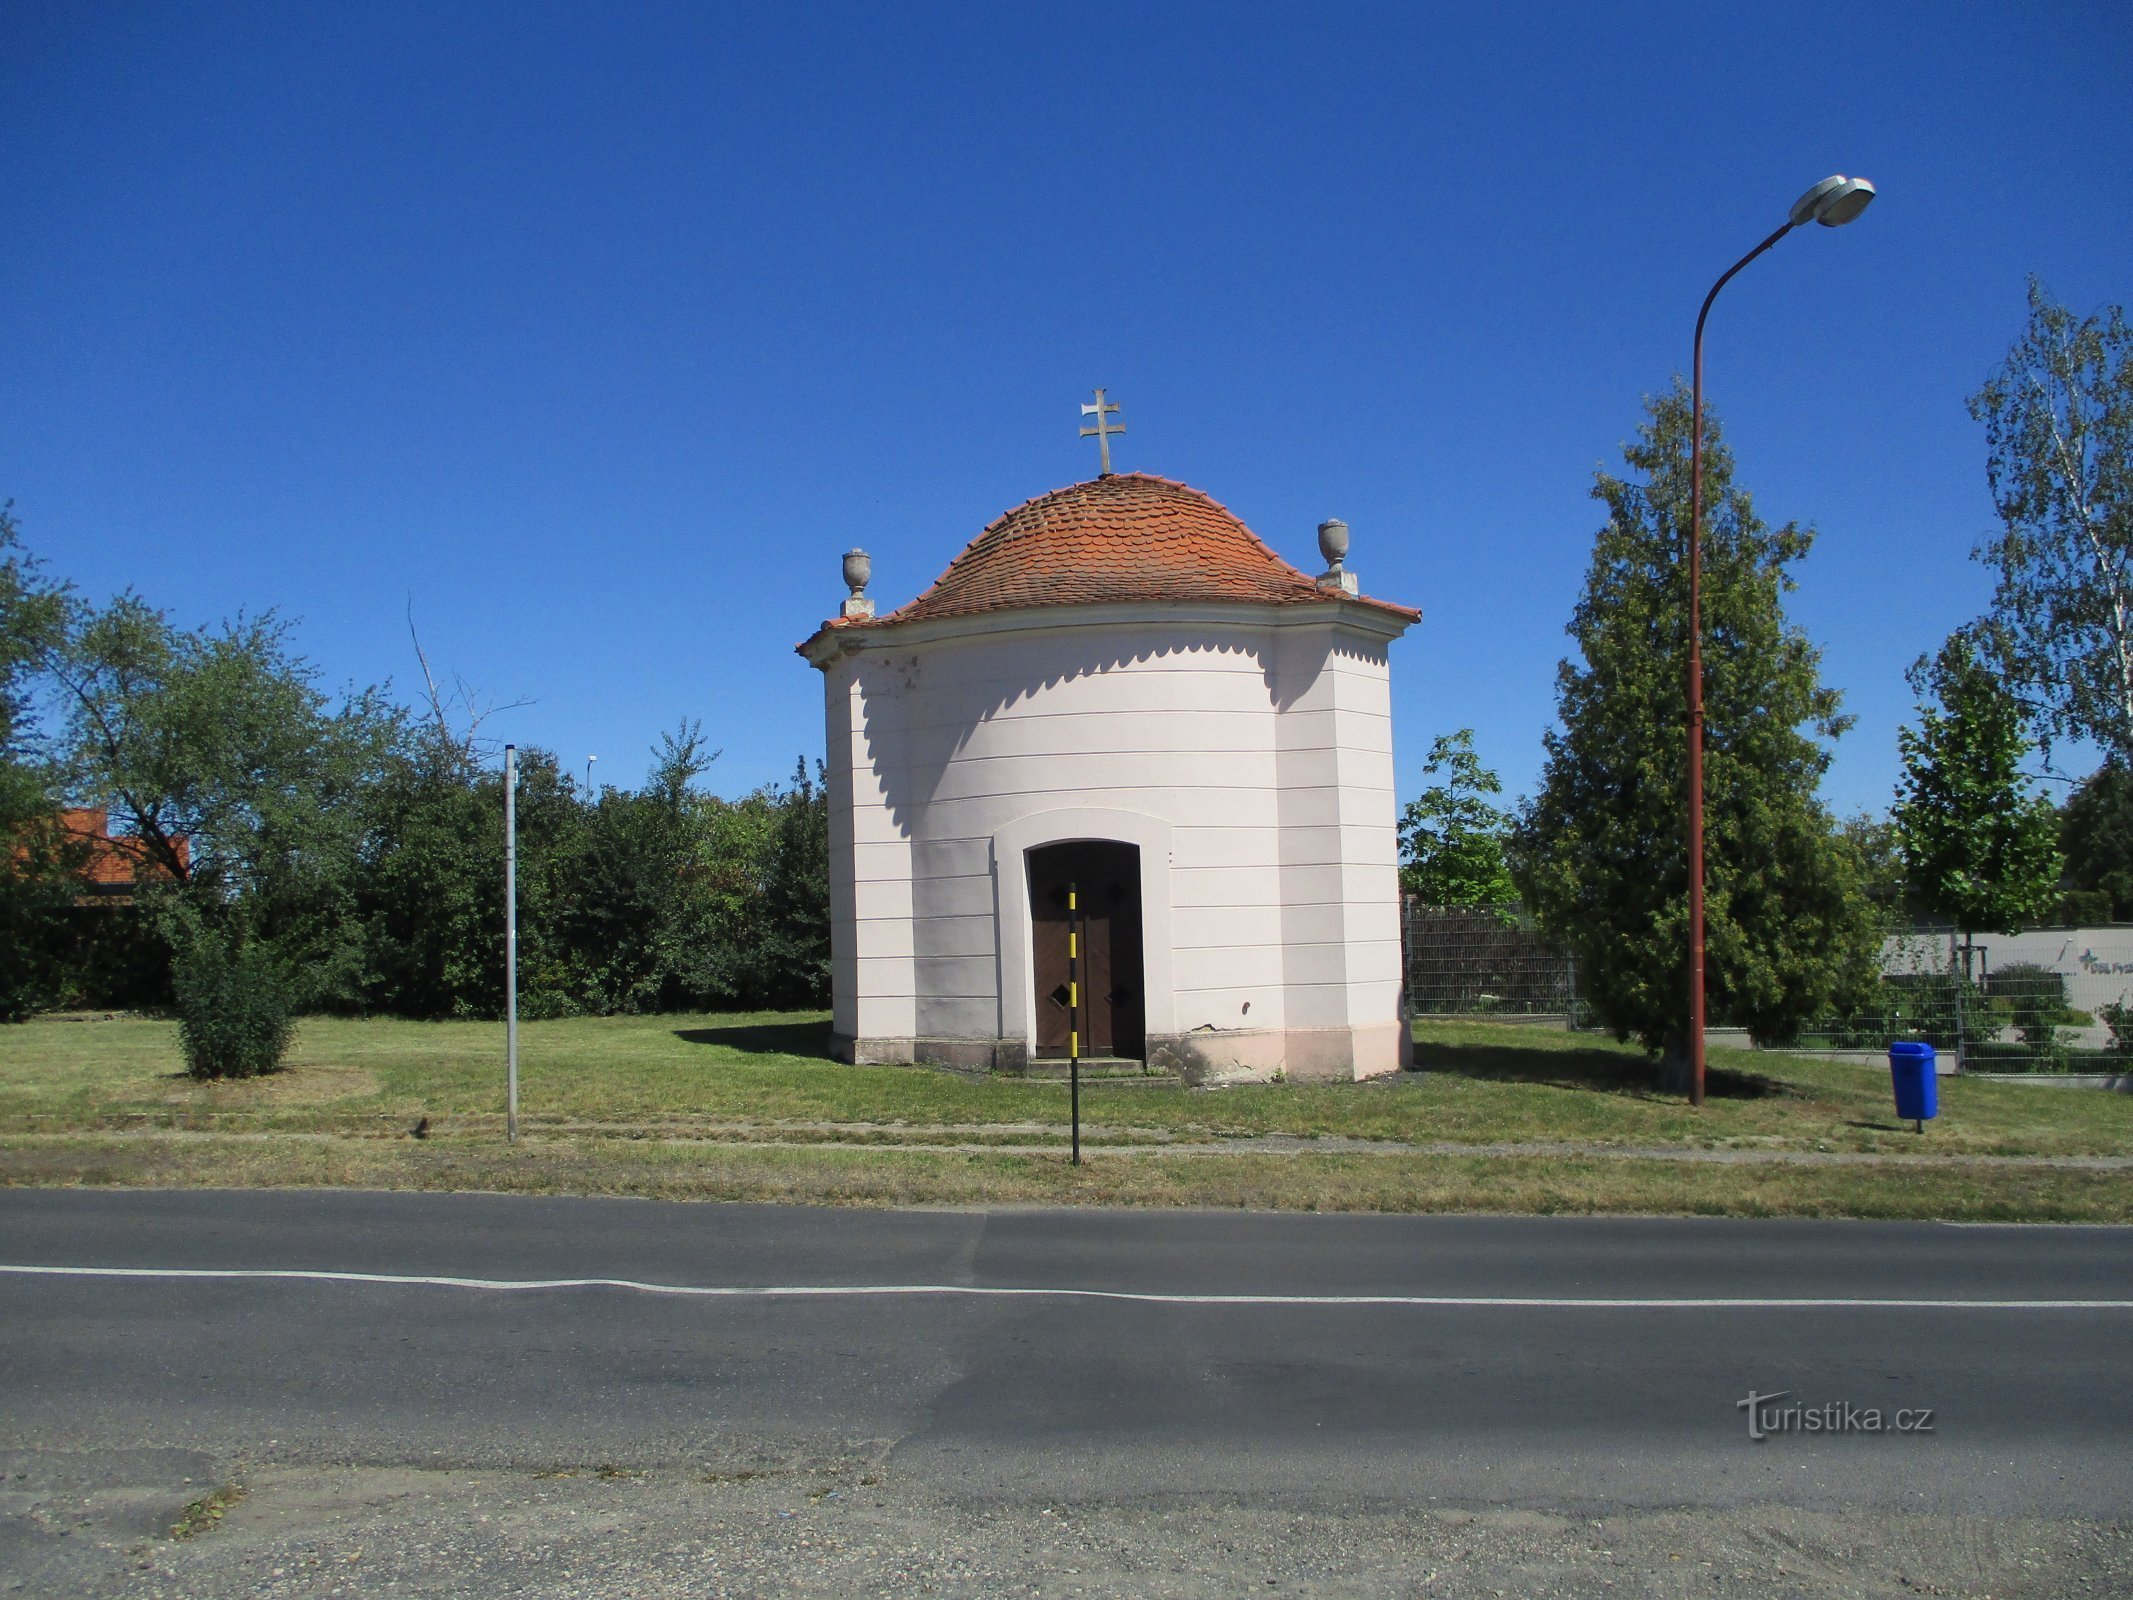 Kapela sv. Rozálie (Roudnice nad Labem, 31.7.2020. XNUMX. XNUMX)